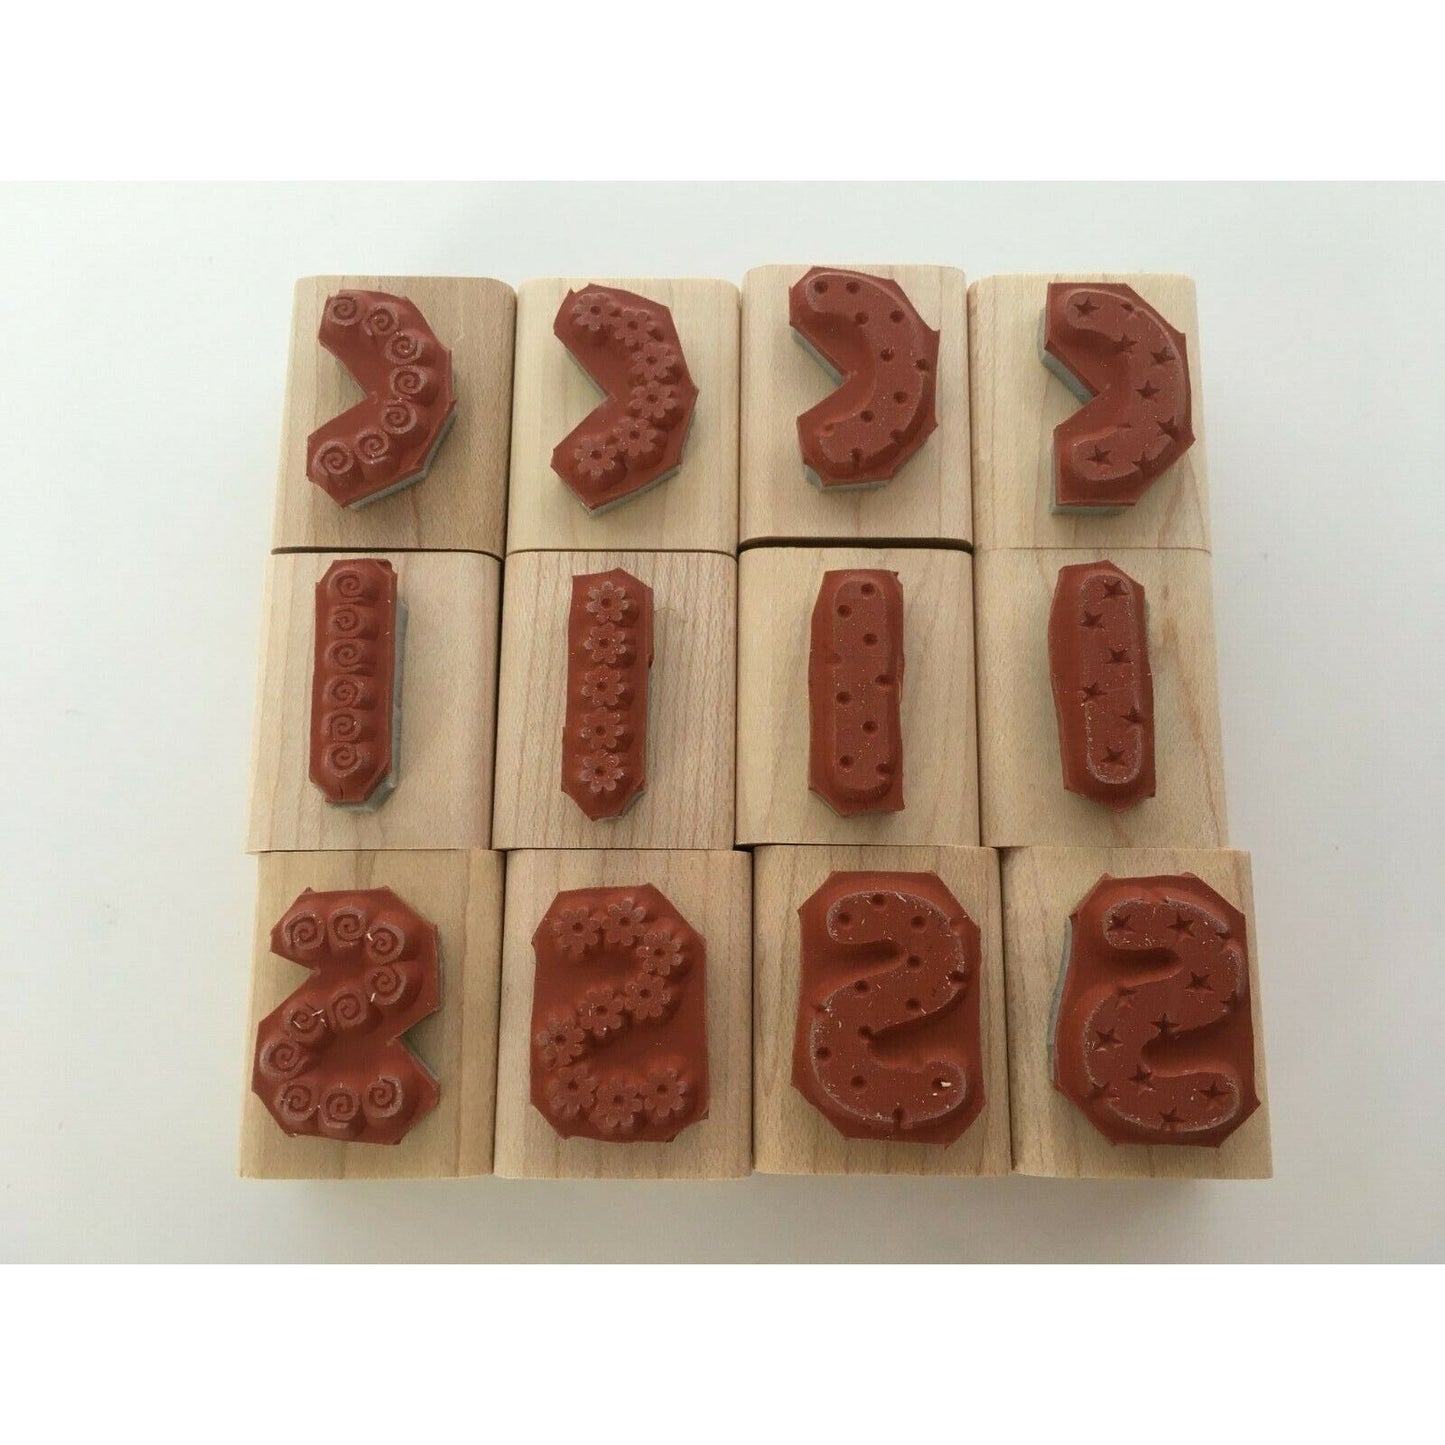 Stampin Up Alphabuilders & Accessories Stamp Sets Letters Creates 8 Alphabets